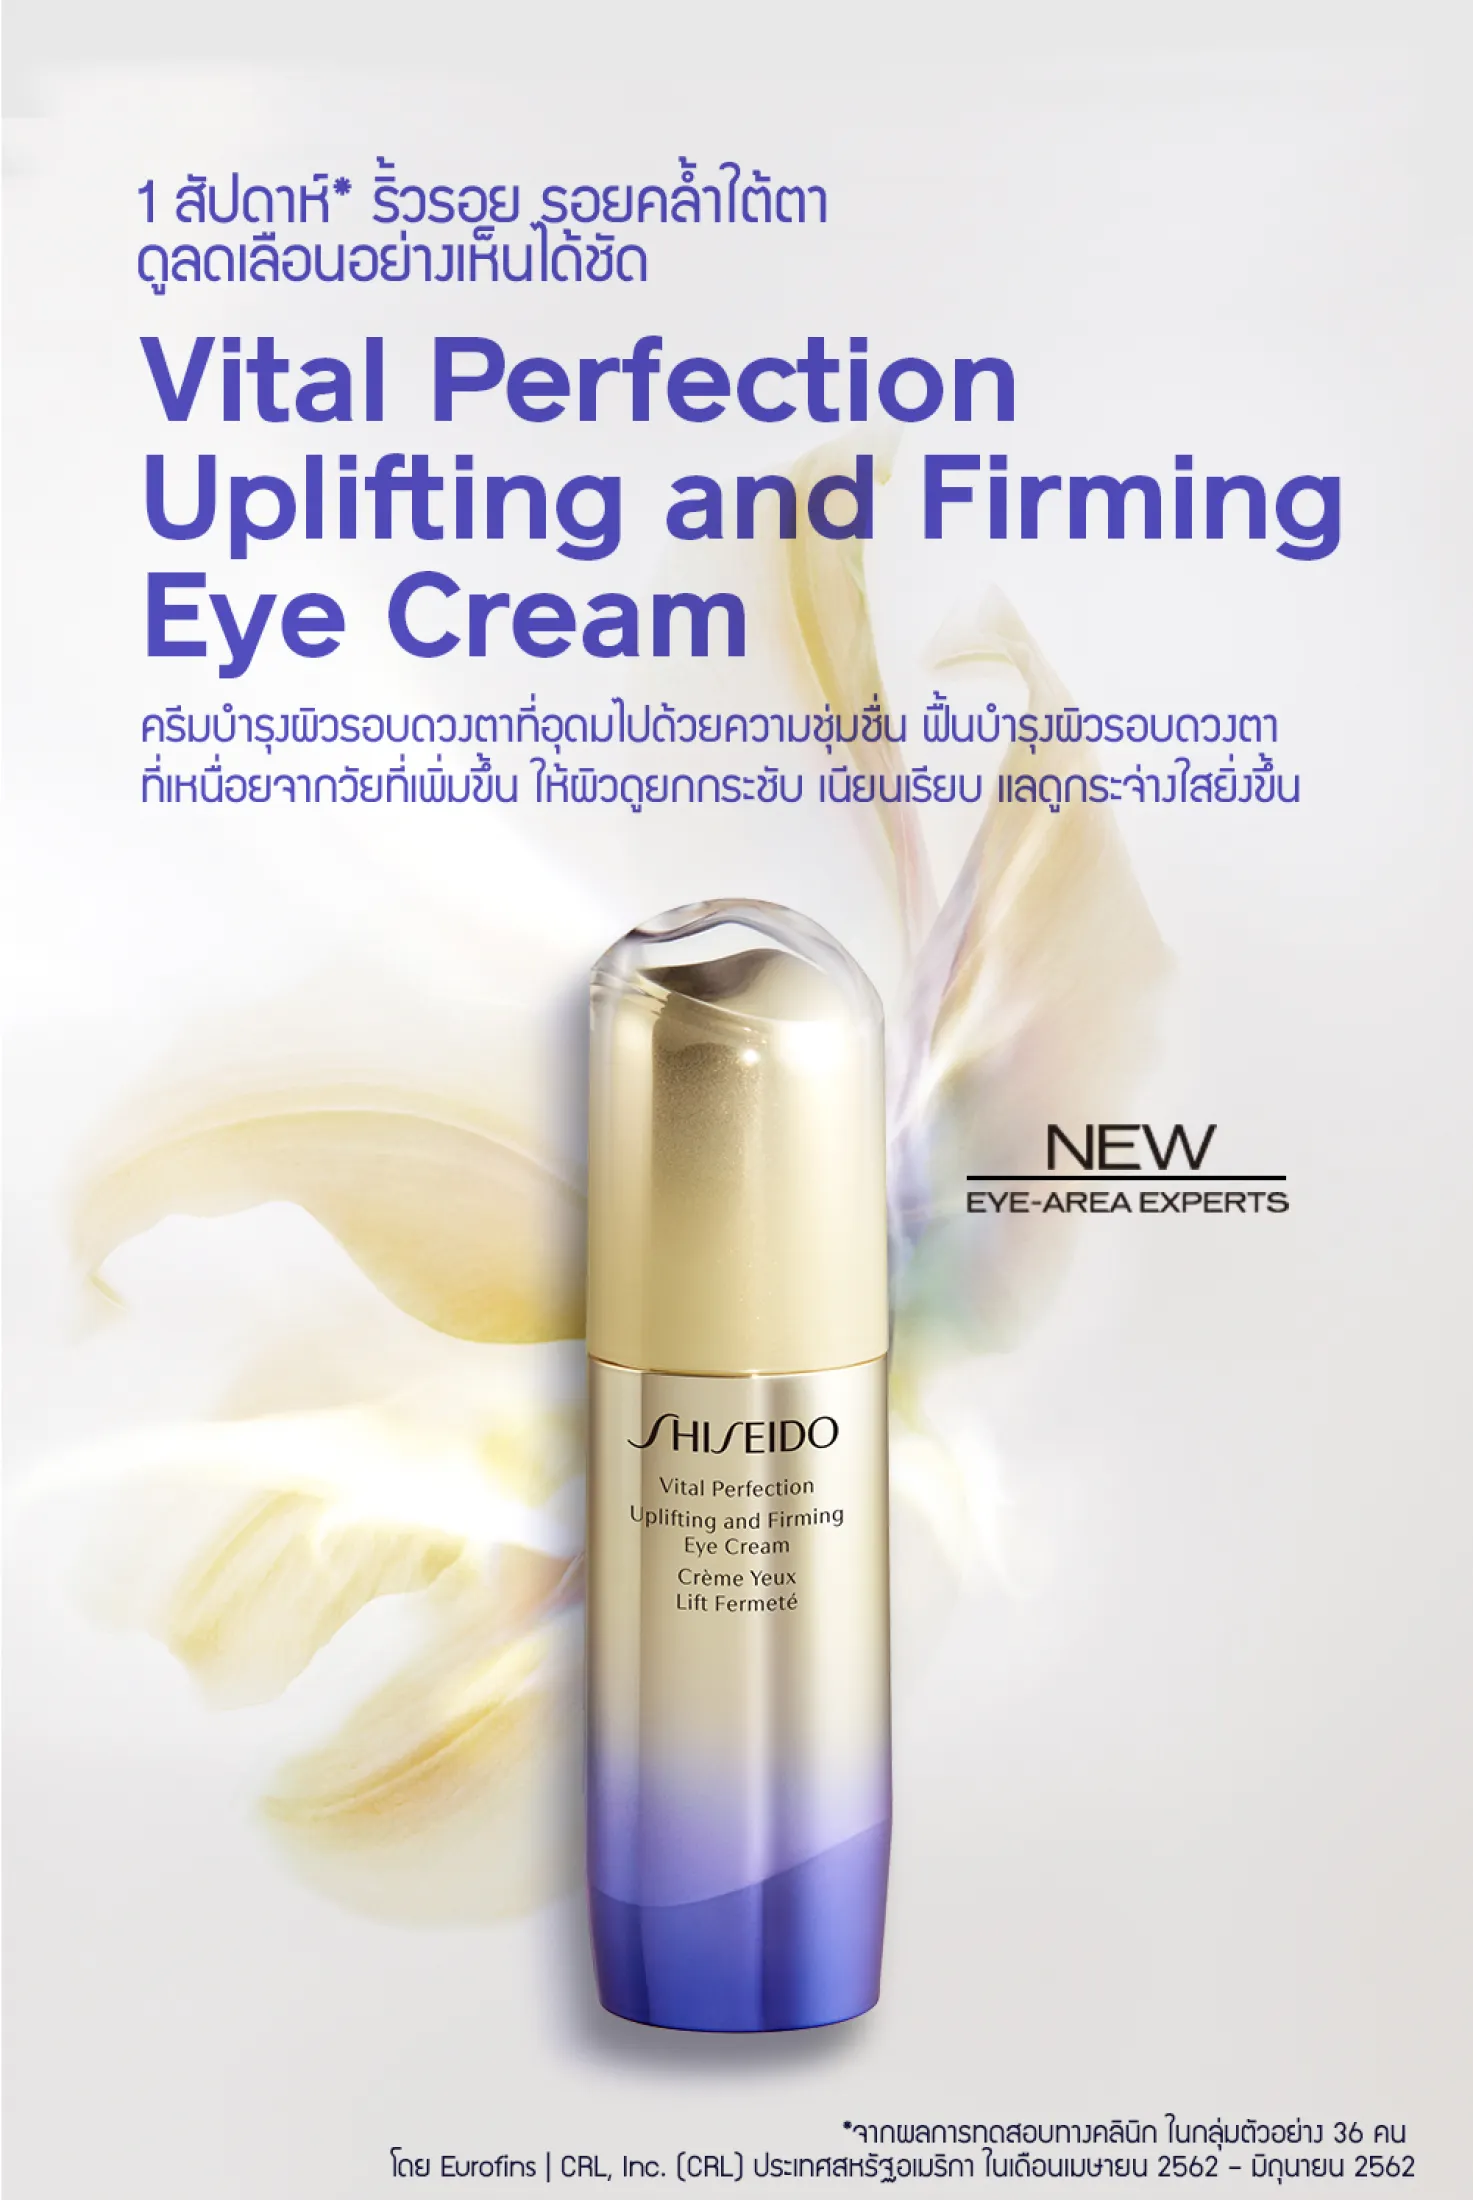 Shiseido Vital Perfection Uplifting and Firming Eye Cream 15ml |  Lazada.co.th